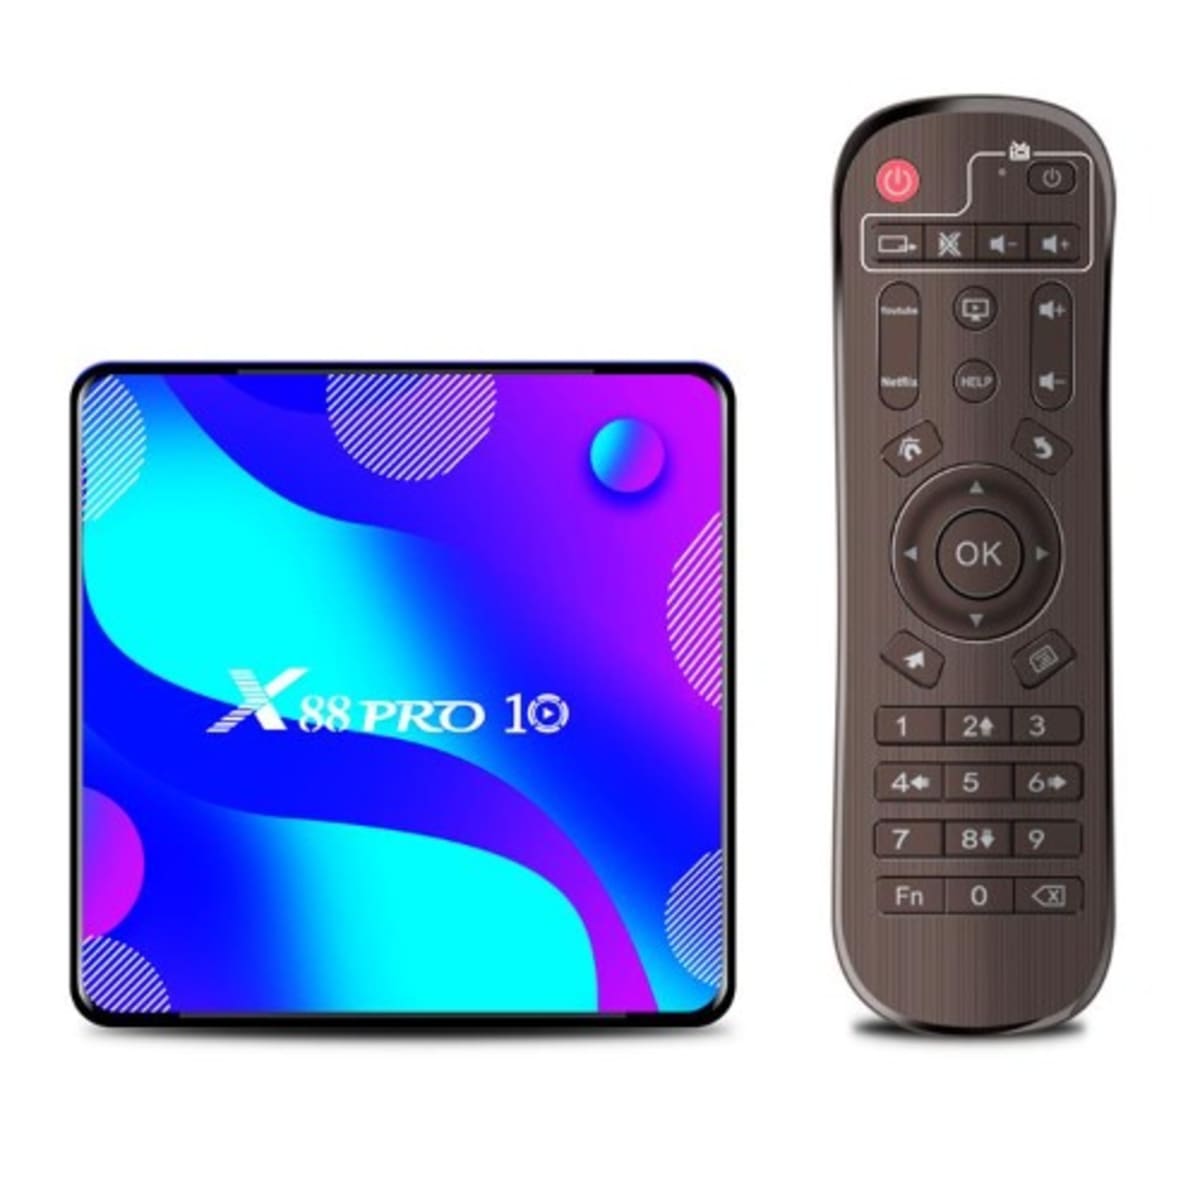 X88 PRO Smart TV Box - 4GB RAM - 64GB ROM - Ultra HD | Konga Shopping